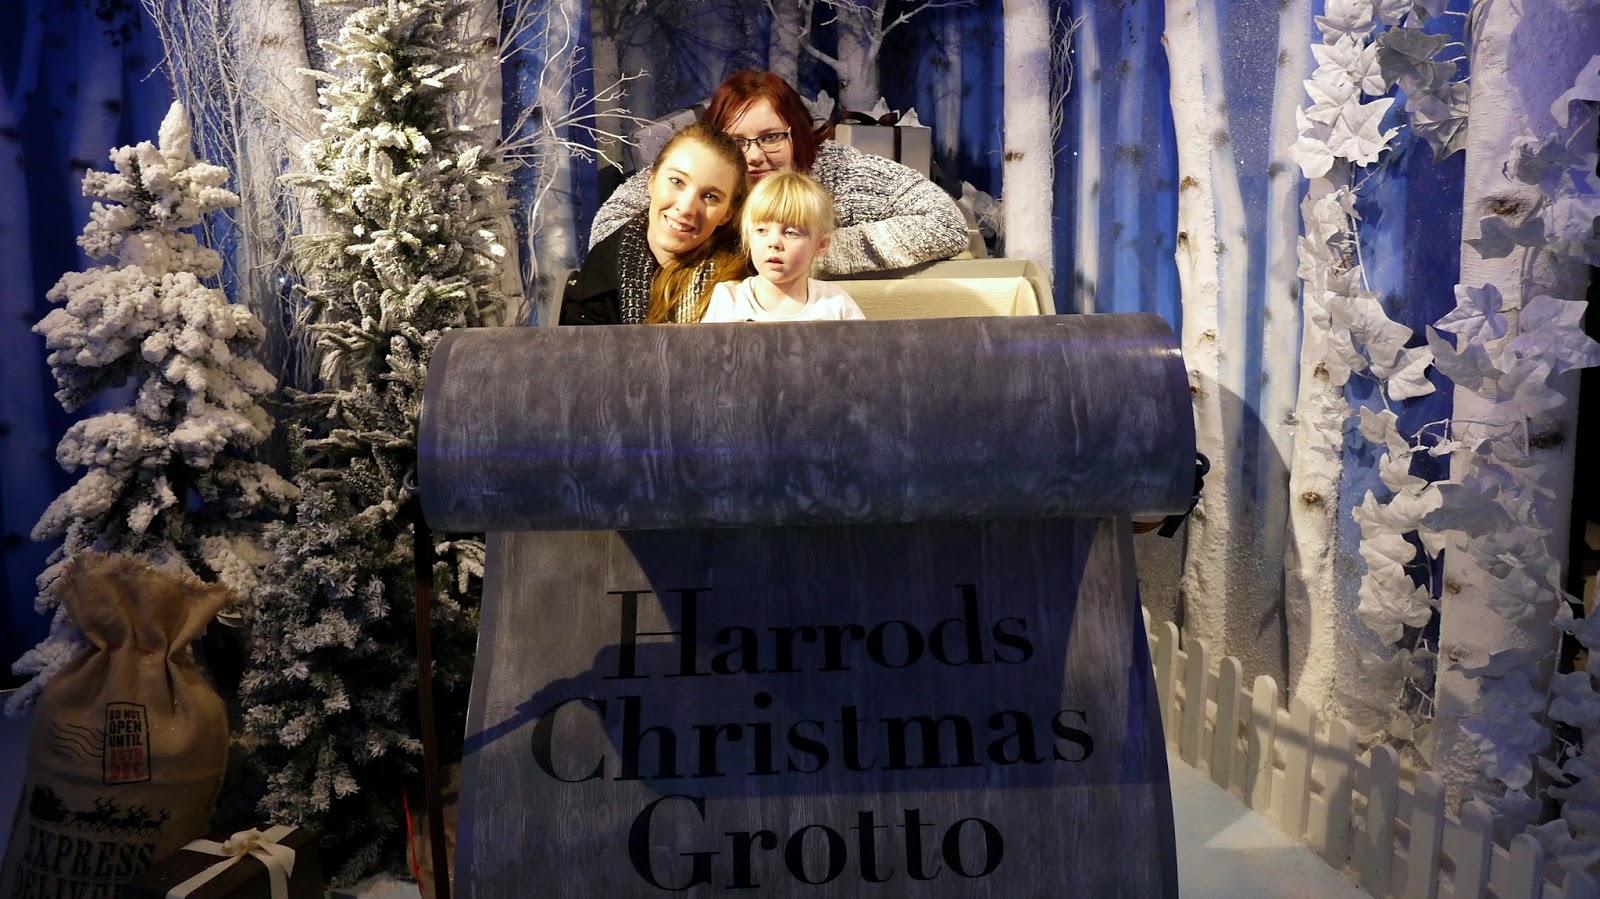 Harrods Christmas Grotto.